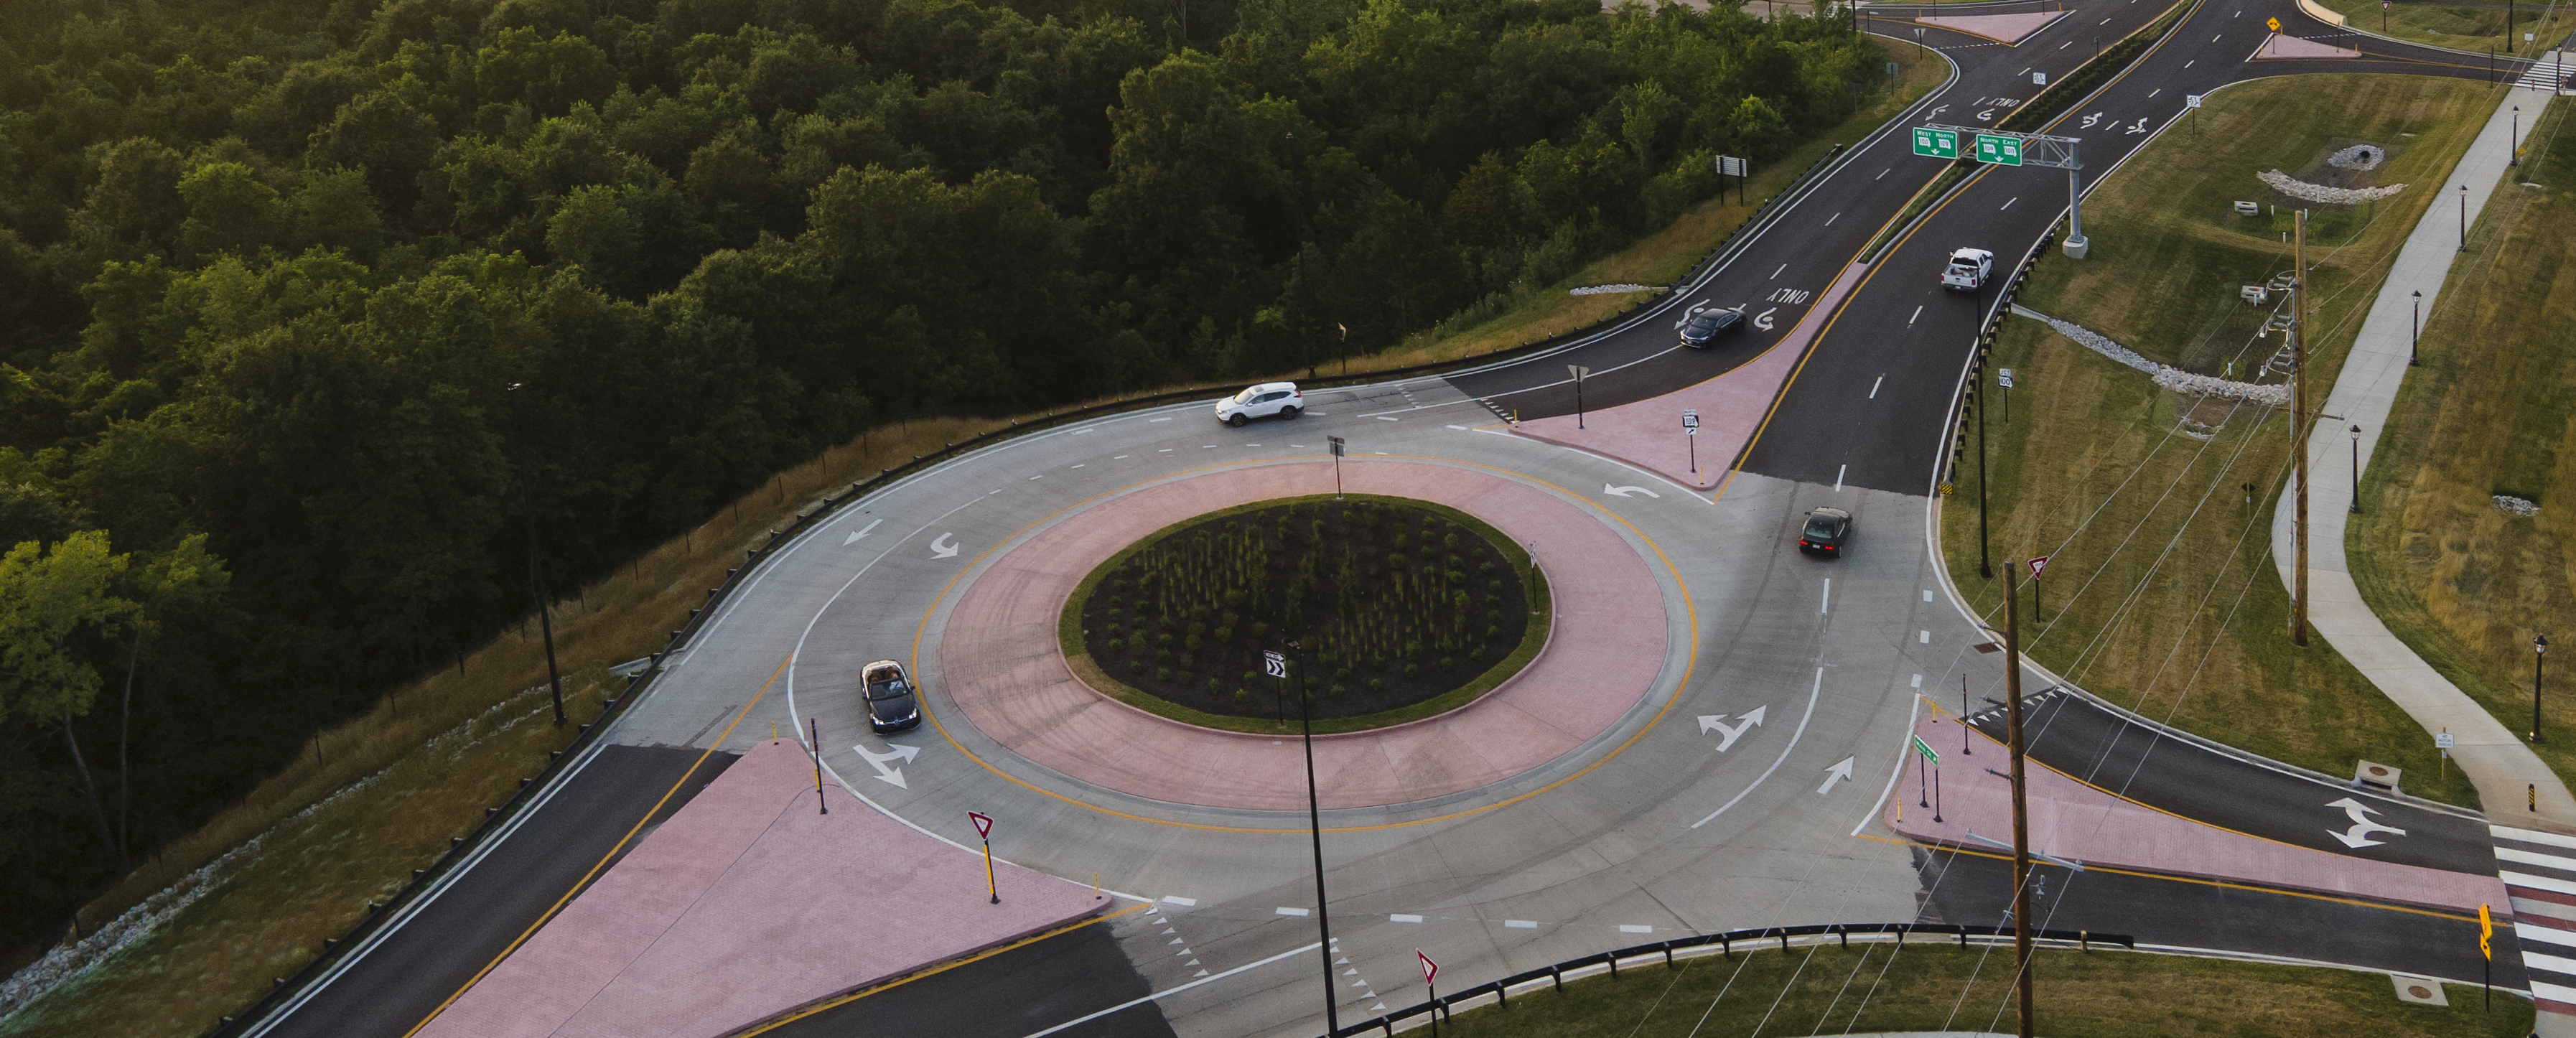 Example roundabout showing three-legged roundabout.